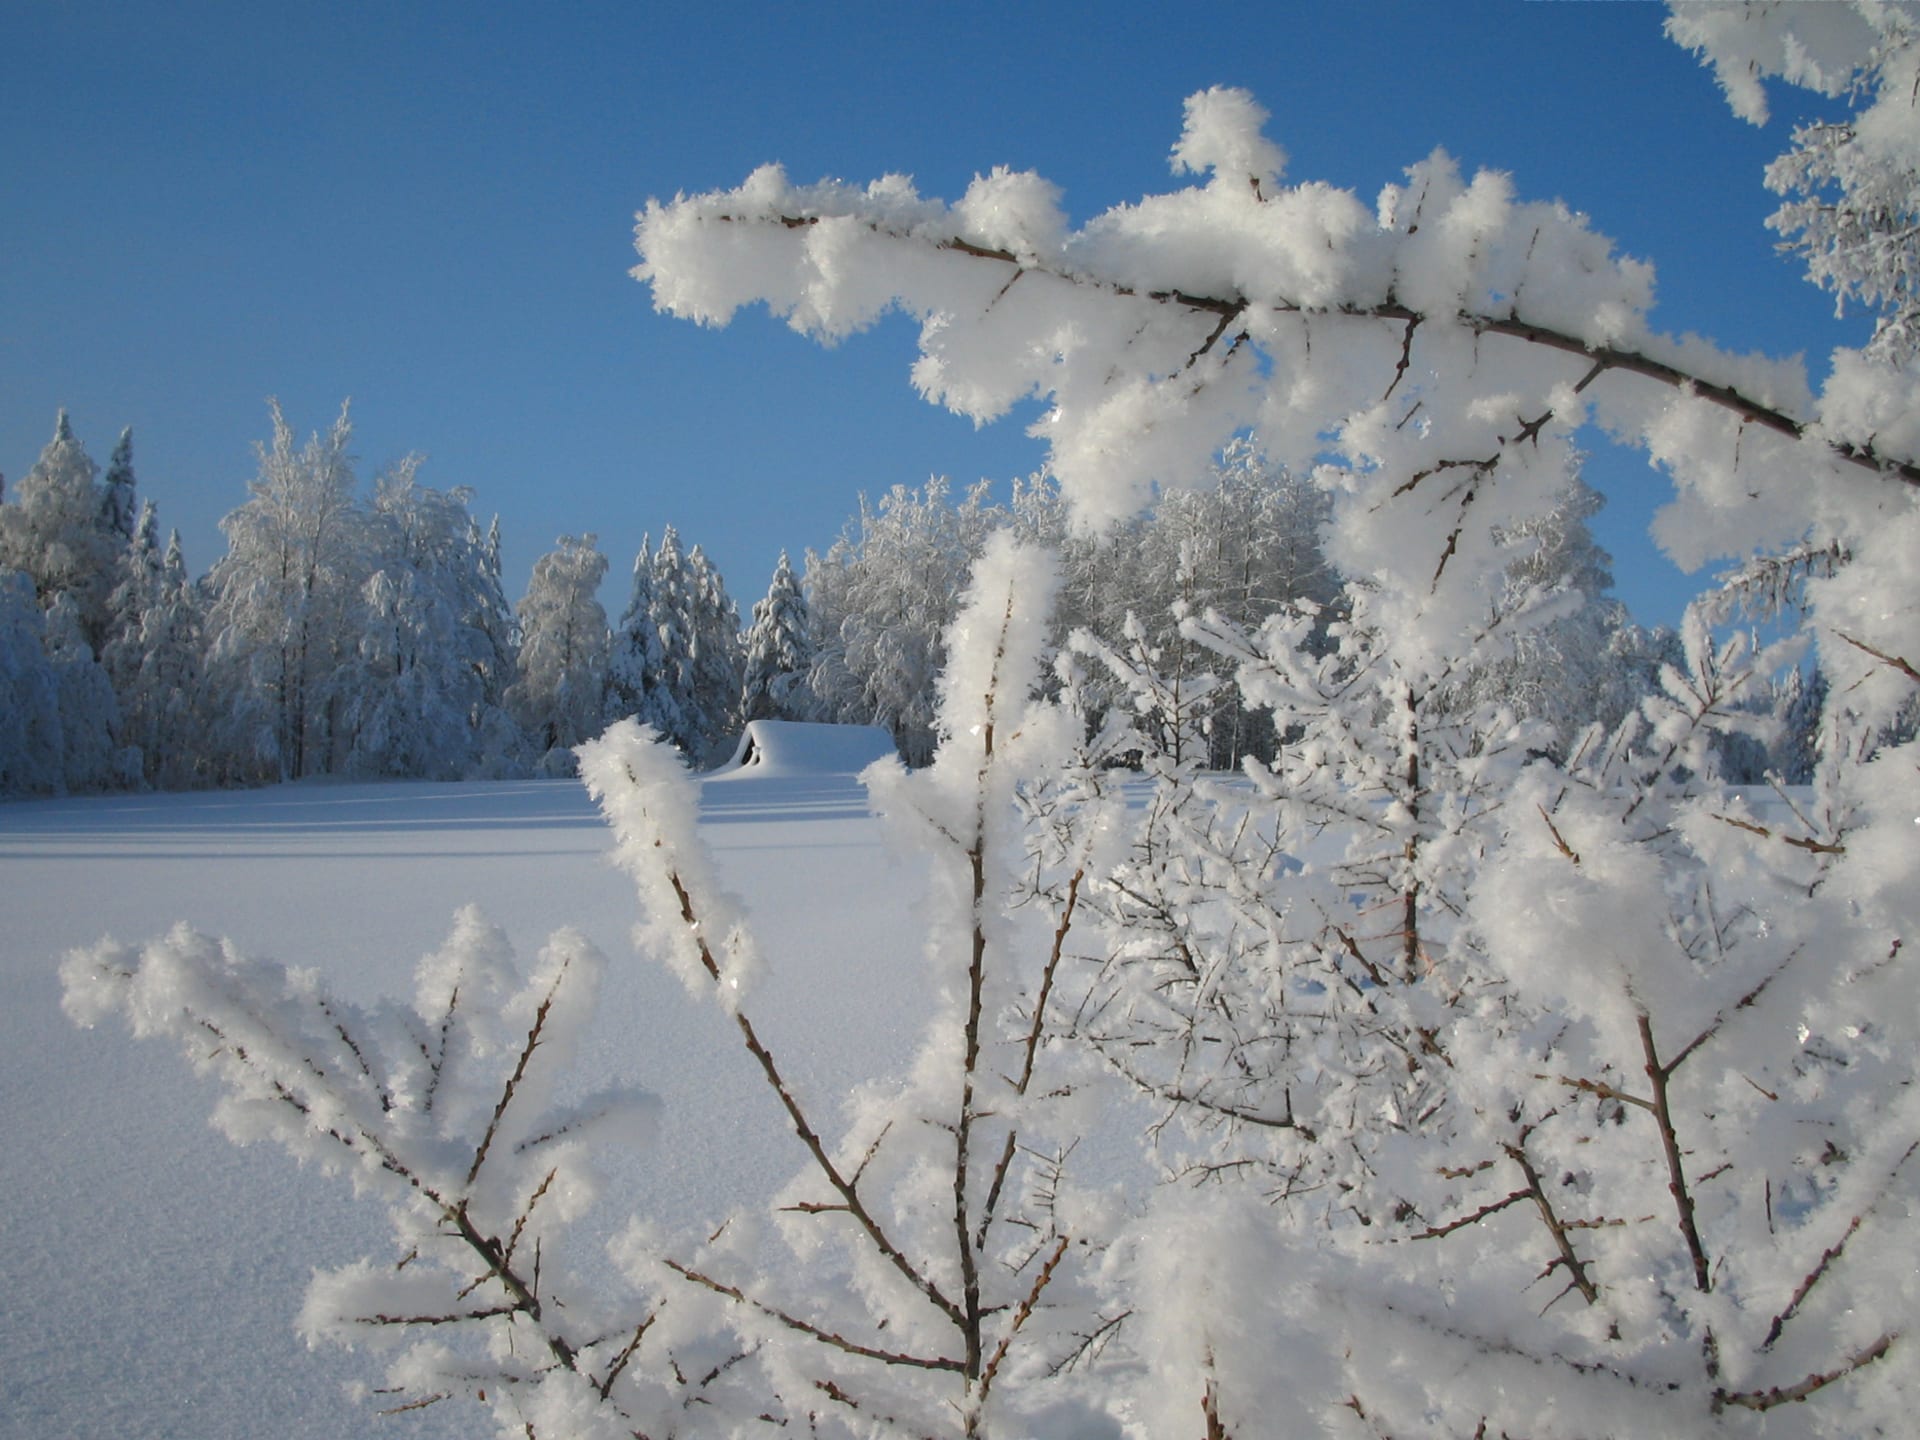 Kuhmo Culture Celebrates Winter